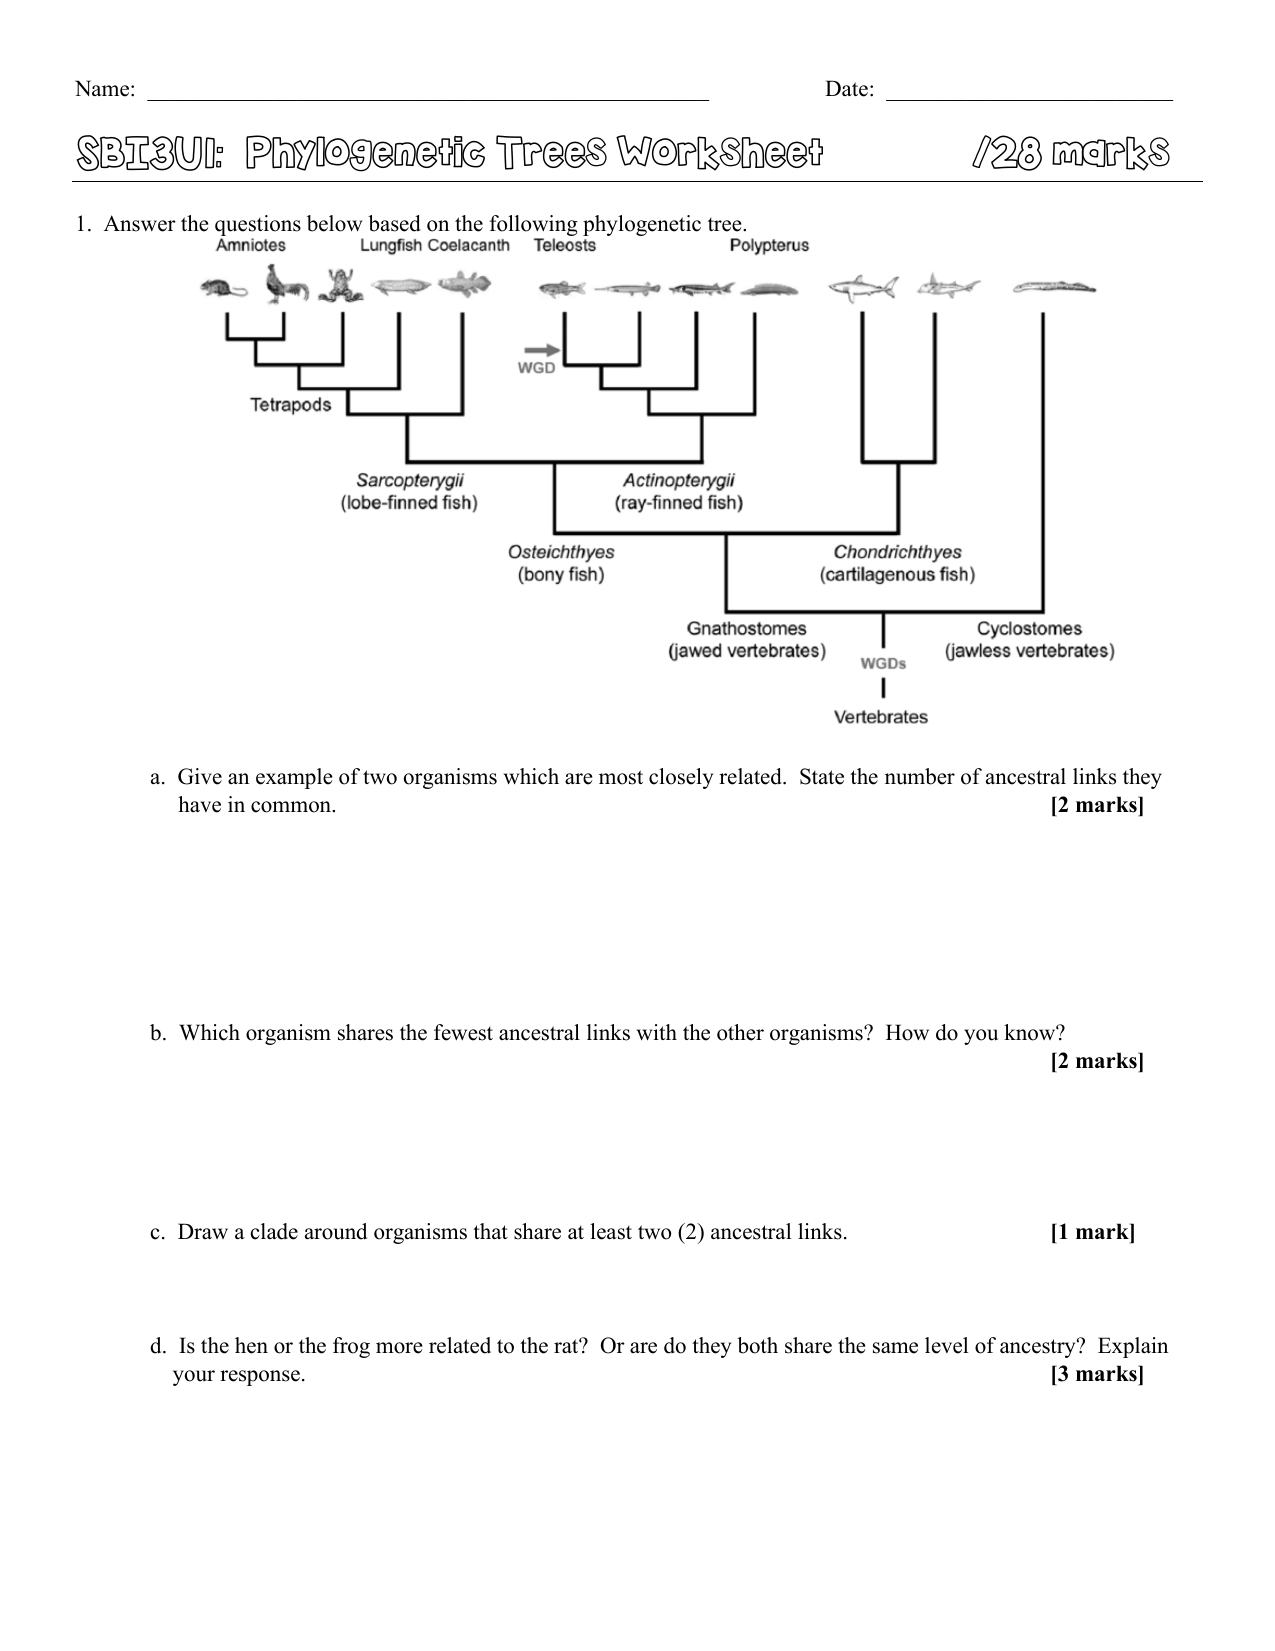 Phylogenetic Tree Worksheet Key